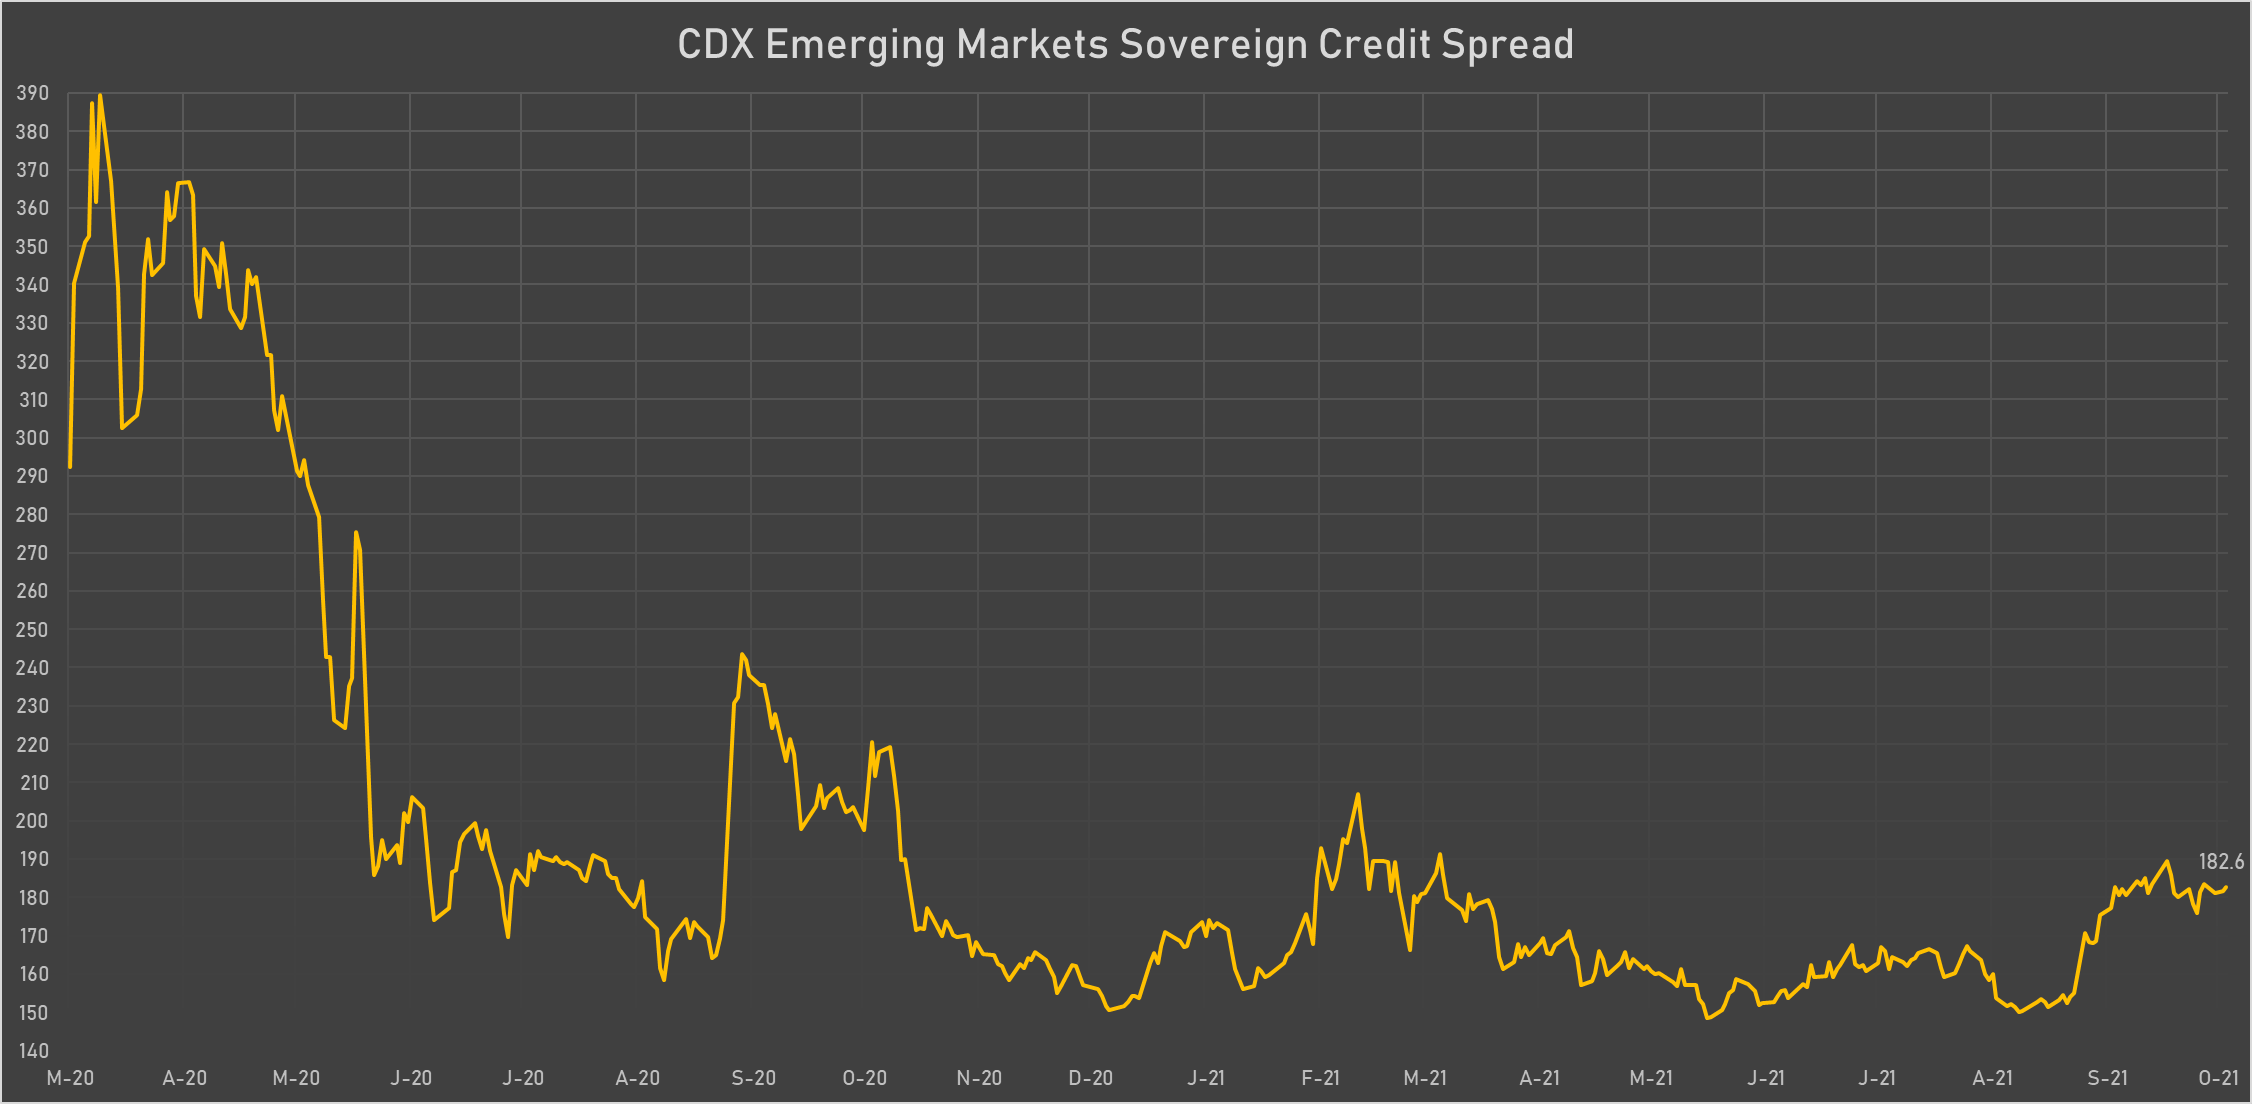 CDX EM Sovereign Credit Spread (bp) | Sources: phipost.com, Refinitiv data